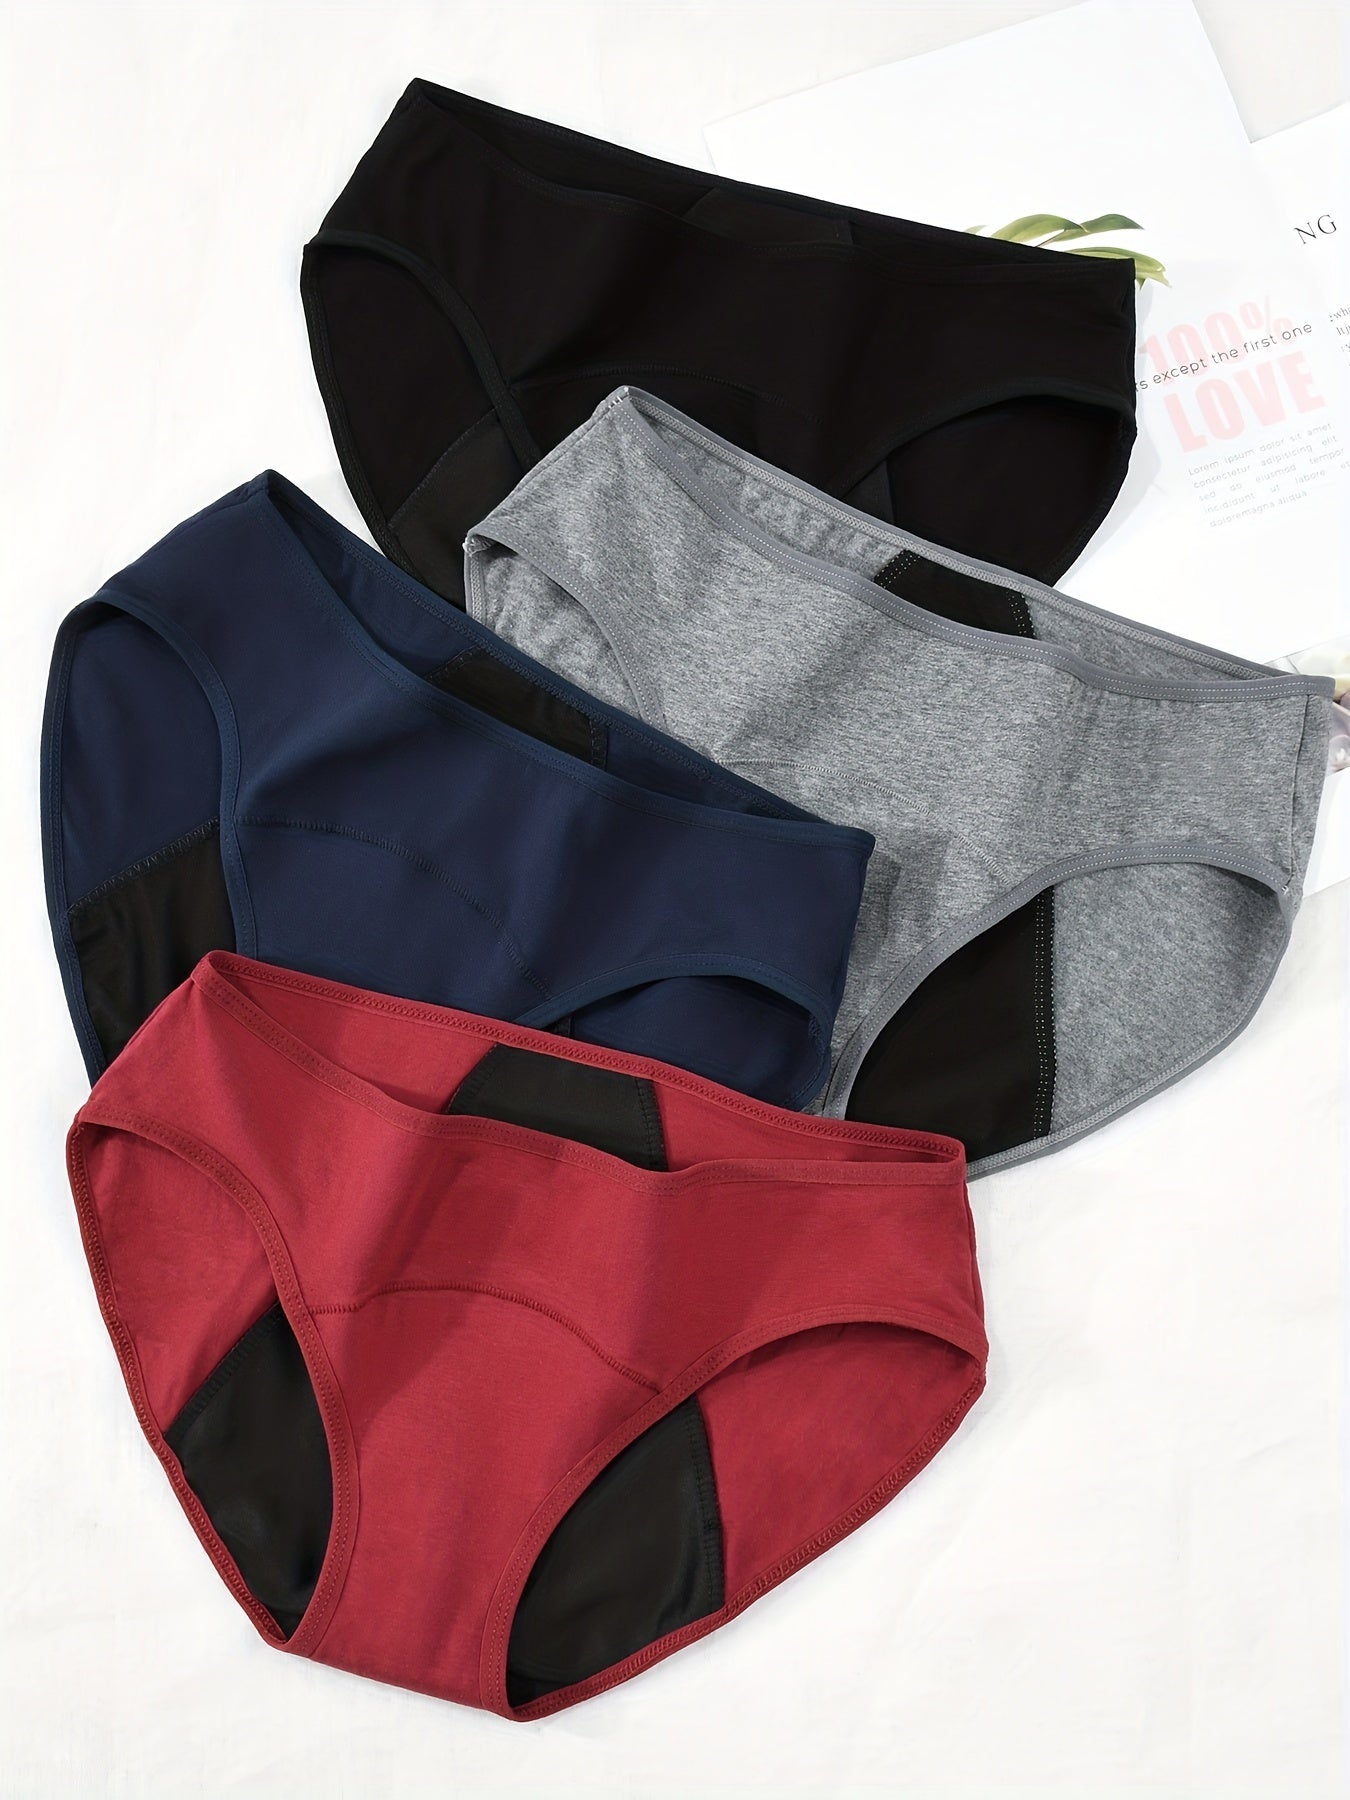 10pcs Anti-Leak Panties, Comfy & Breathable Full-Coverange Panties, Women's Lingerie & Underwear